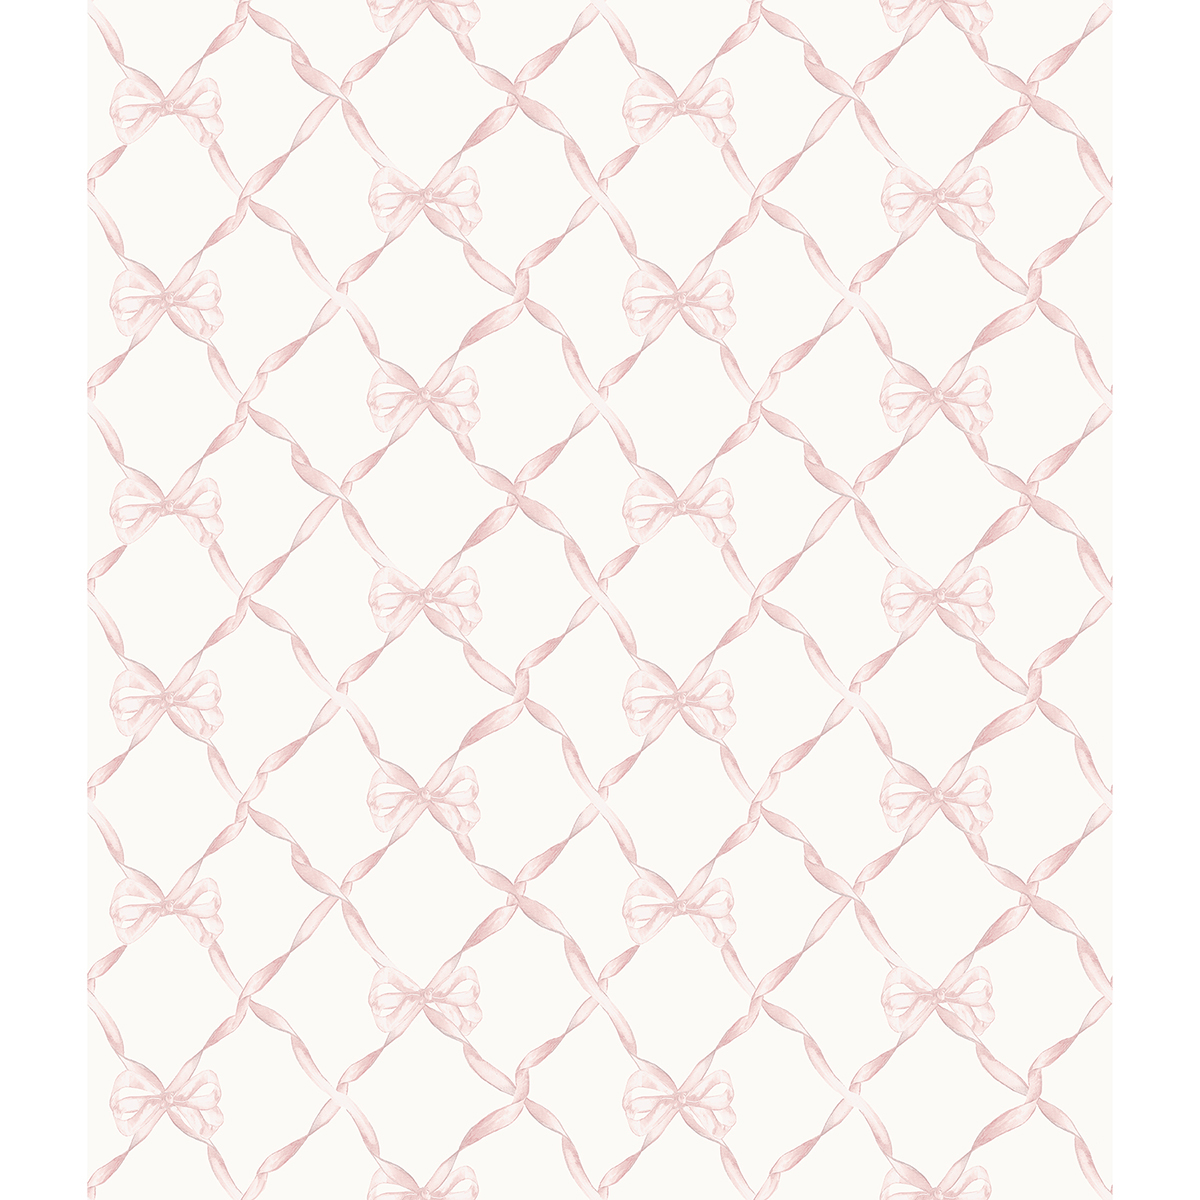 AST4114 - Baby Bow Light Pink Ribbon Trellis Wallpaper - by A-Street Prints